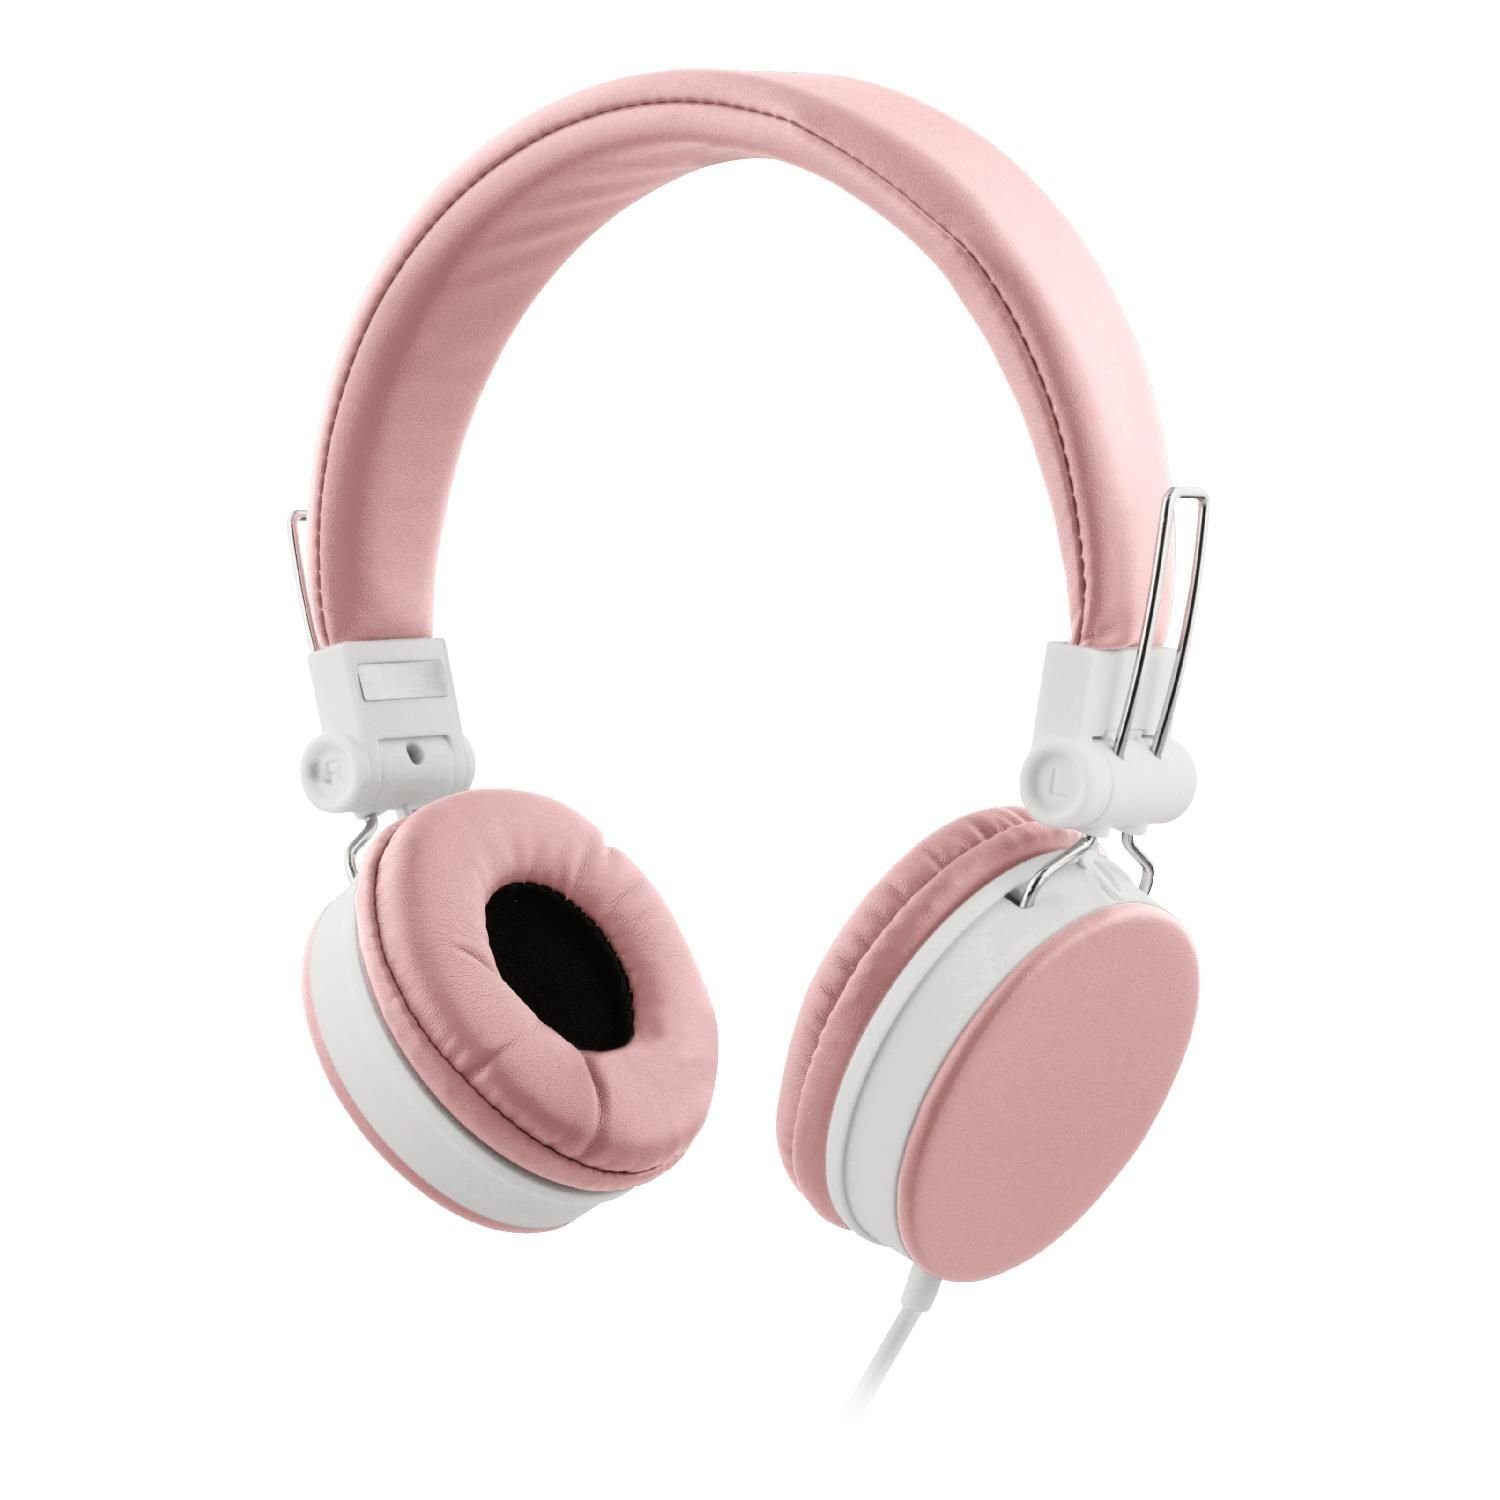 Kopfhörer (integriertes Mikrofon, faltbares 1,2m 3.5mm inkl. Herstellergarantie) / Headset, 5 On-Ear-Kopfhörer Ohrpolster rosa, Kabel pink Klinkenanschluss STREETZ Jahre